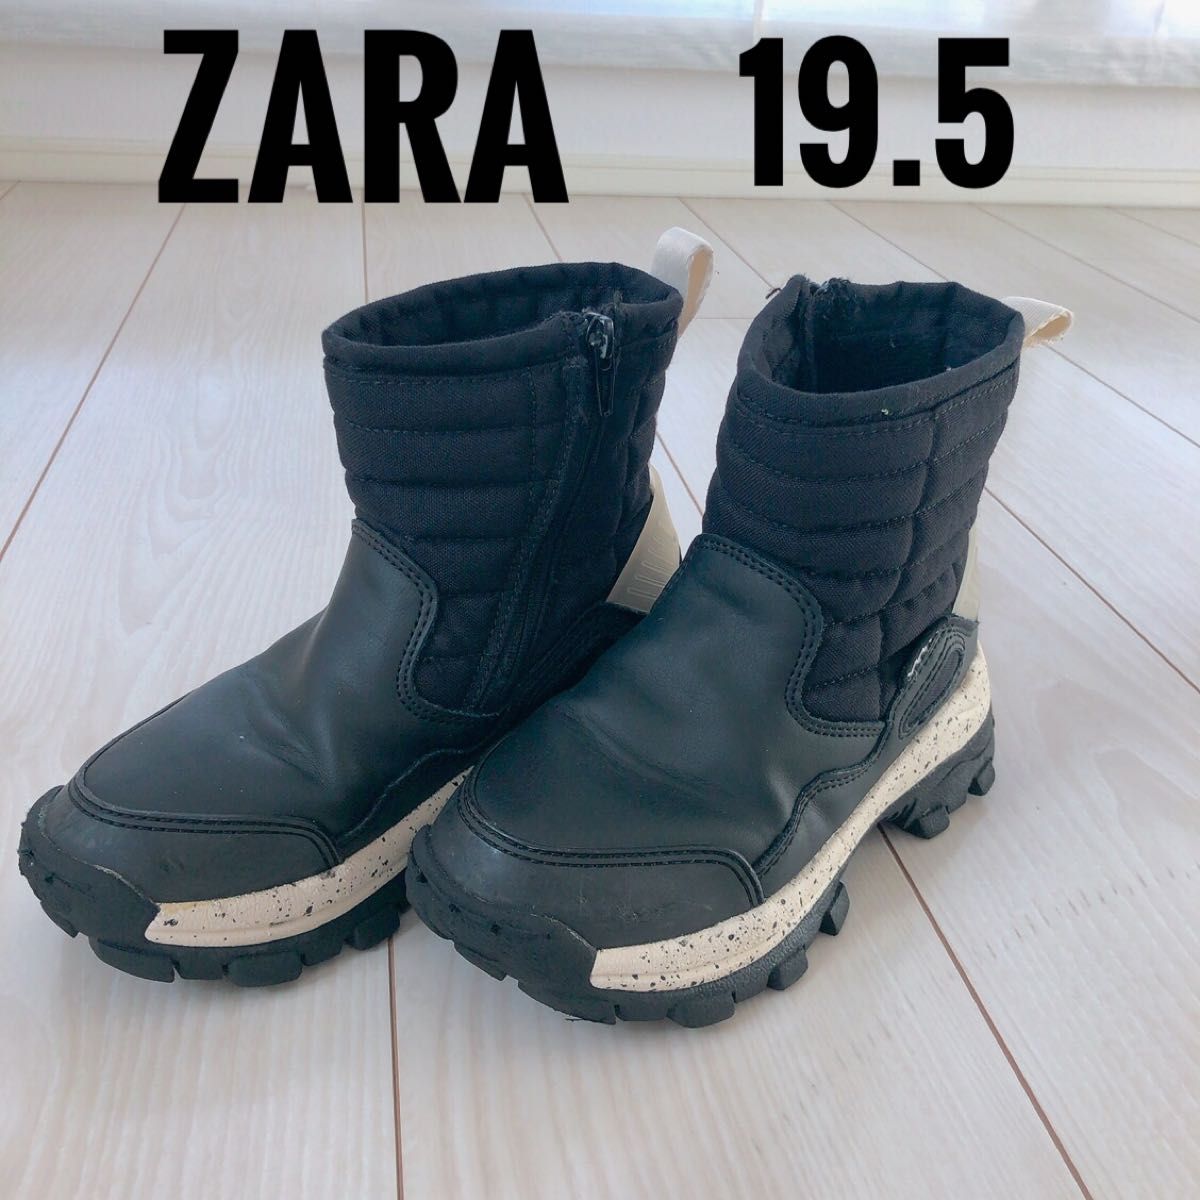 Zara ブーツ20cm - ブーツ